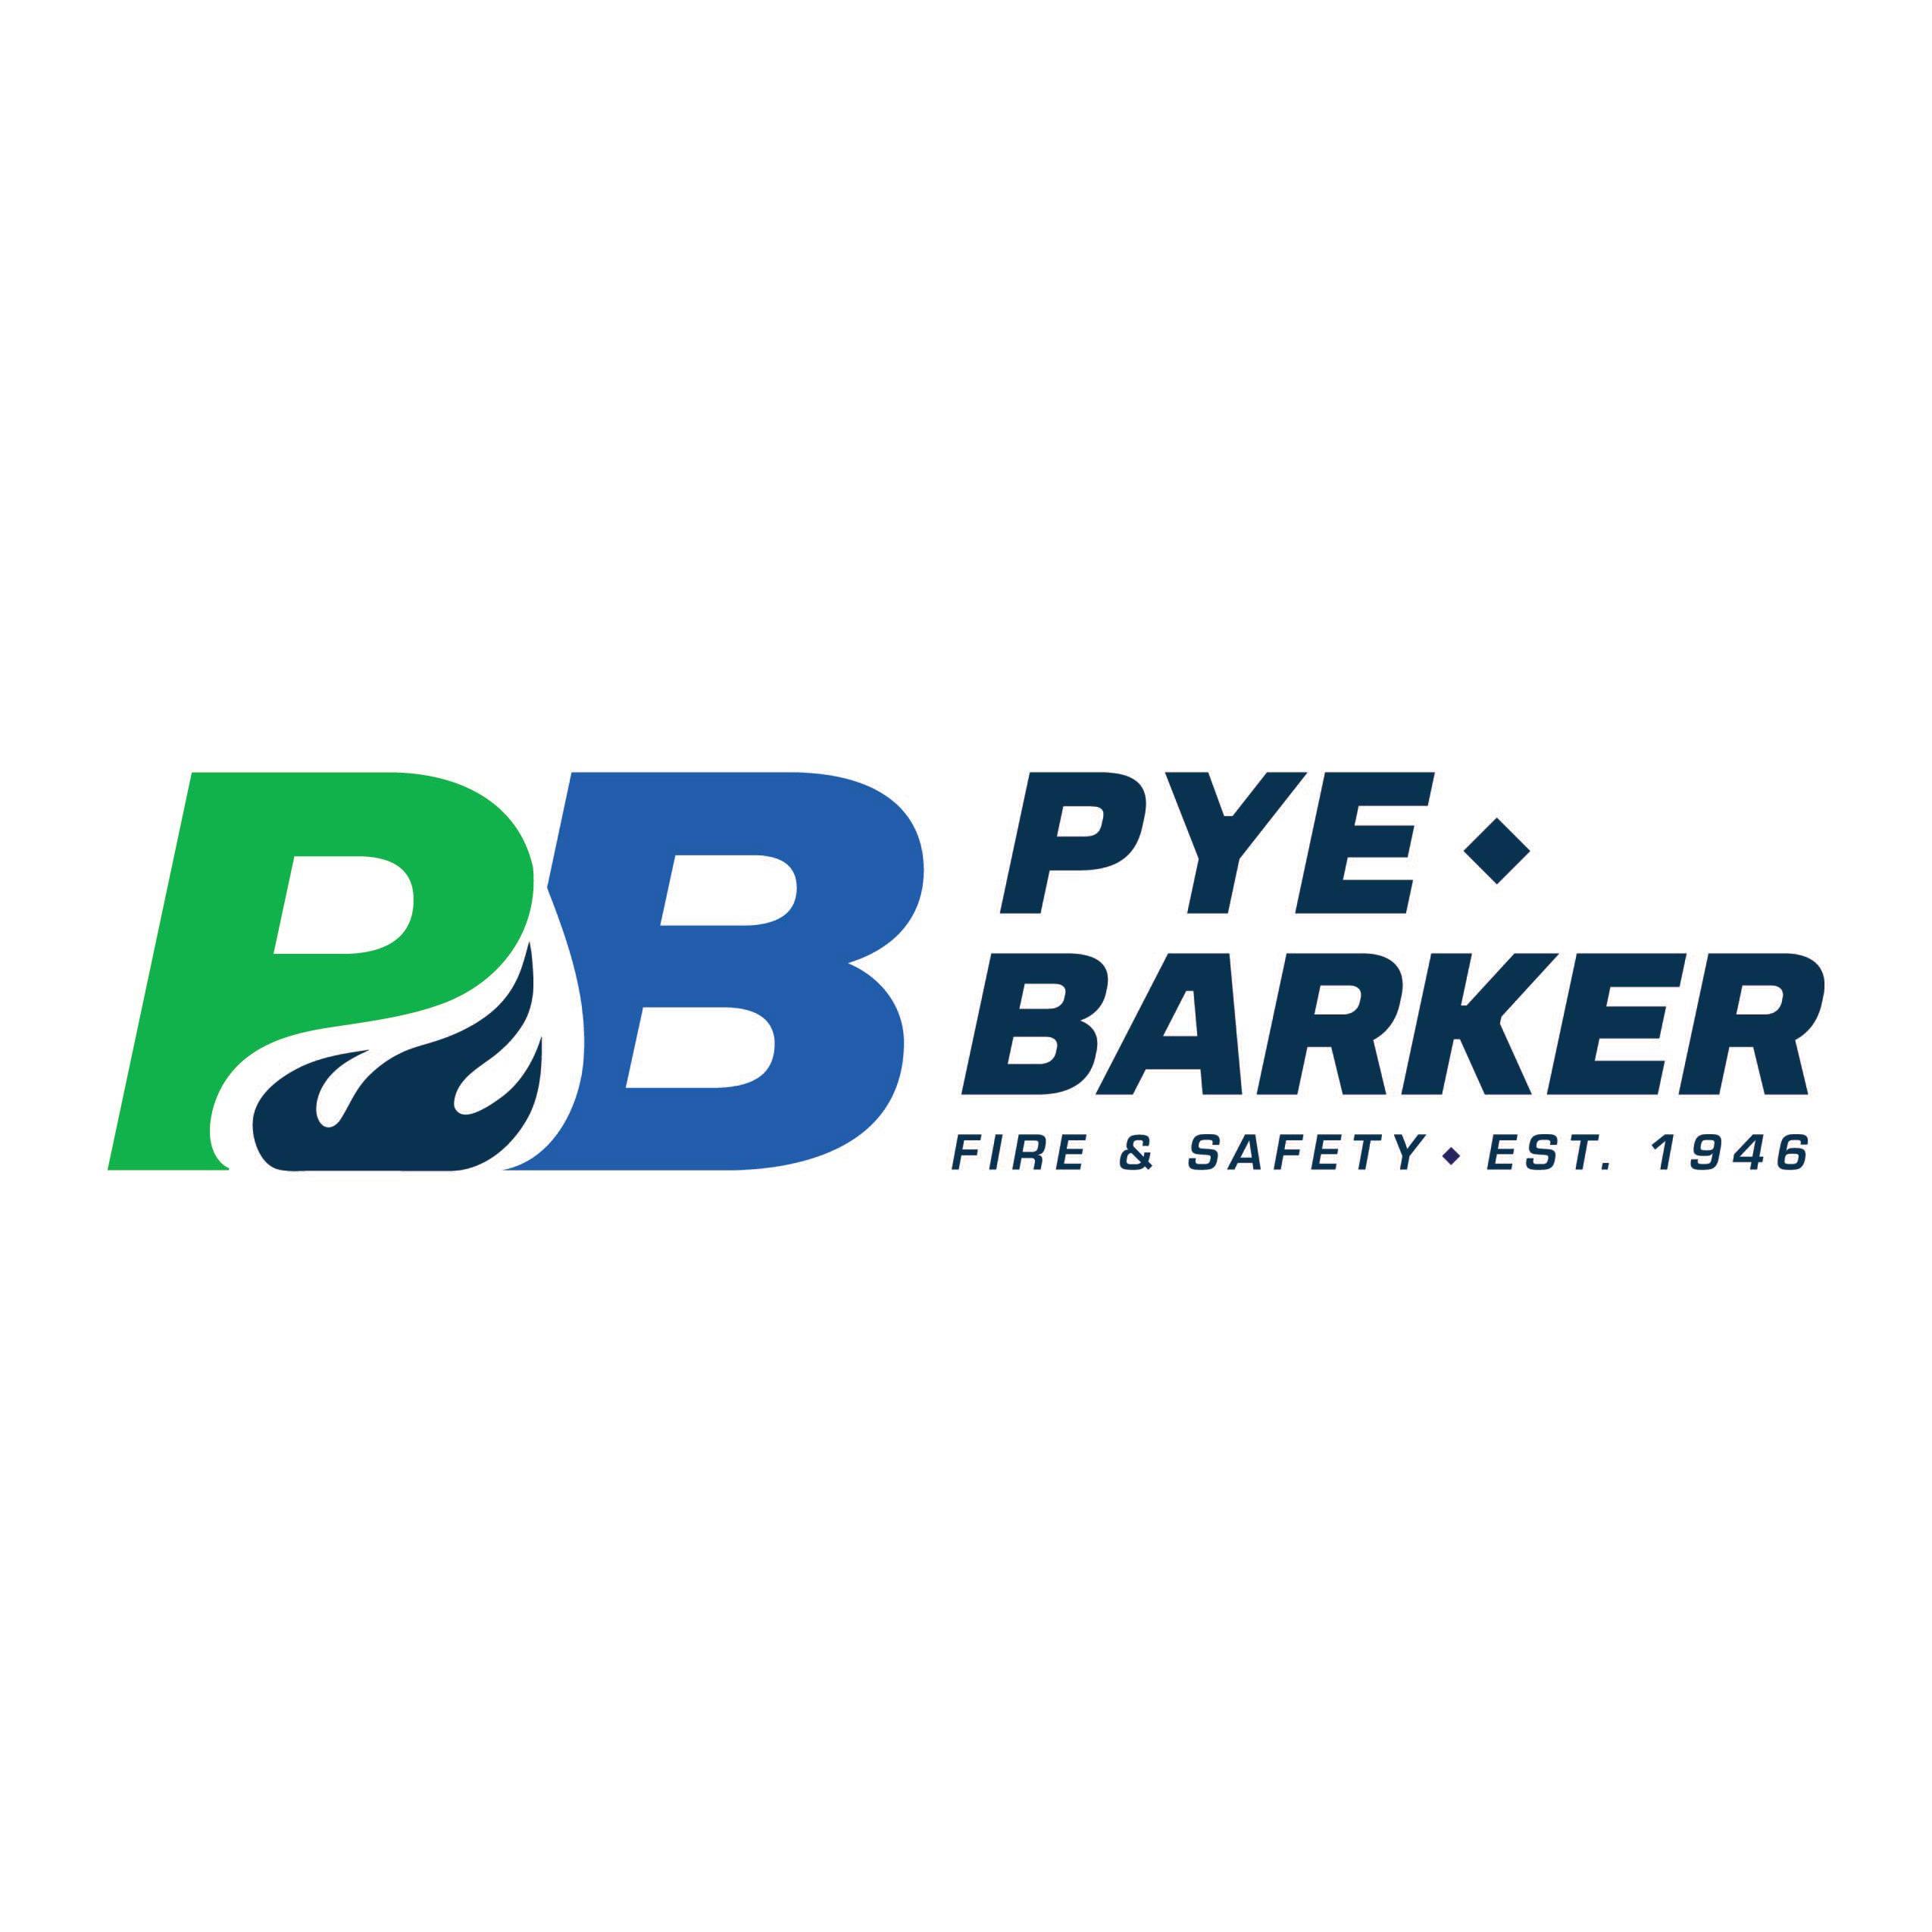 Pye-Barker Fire & Safety - Spartanburg, SC 29307 - (864)573-9400 | ShowMeLocal.com